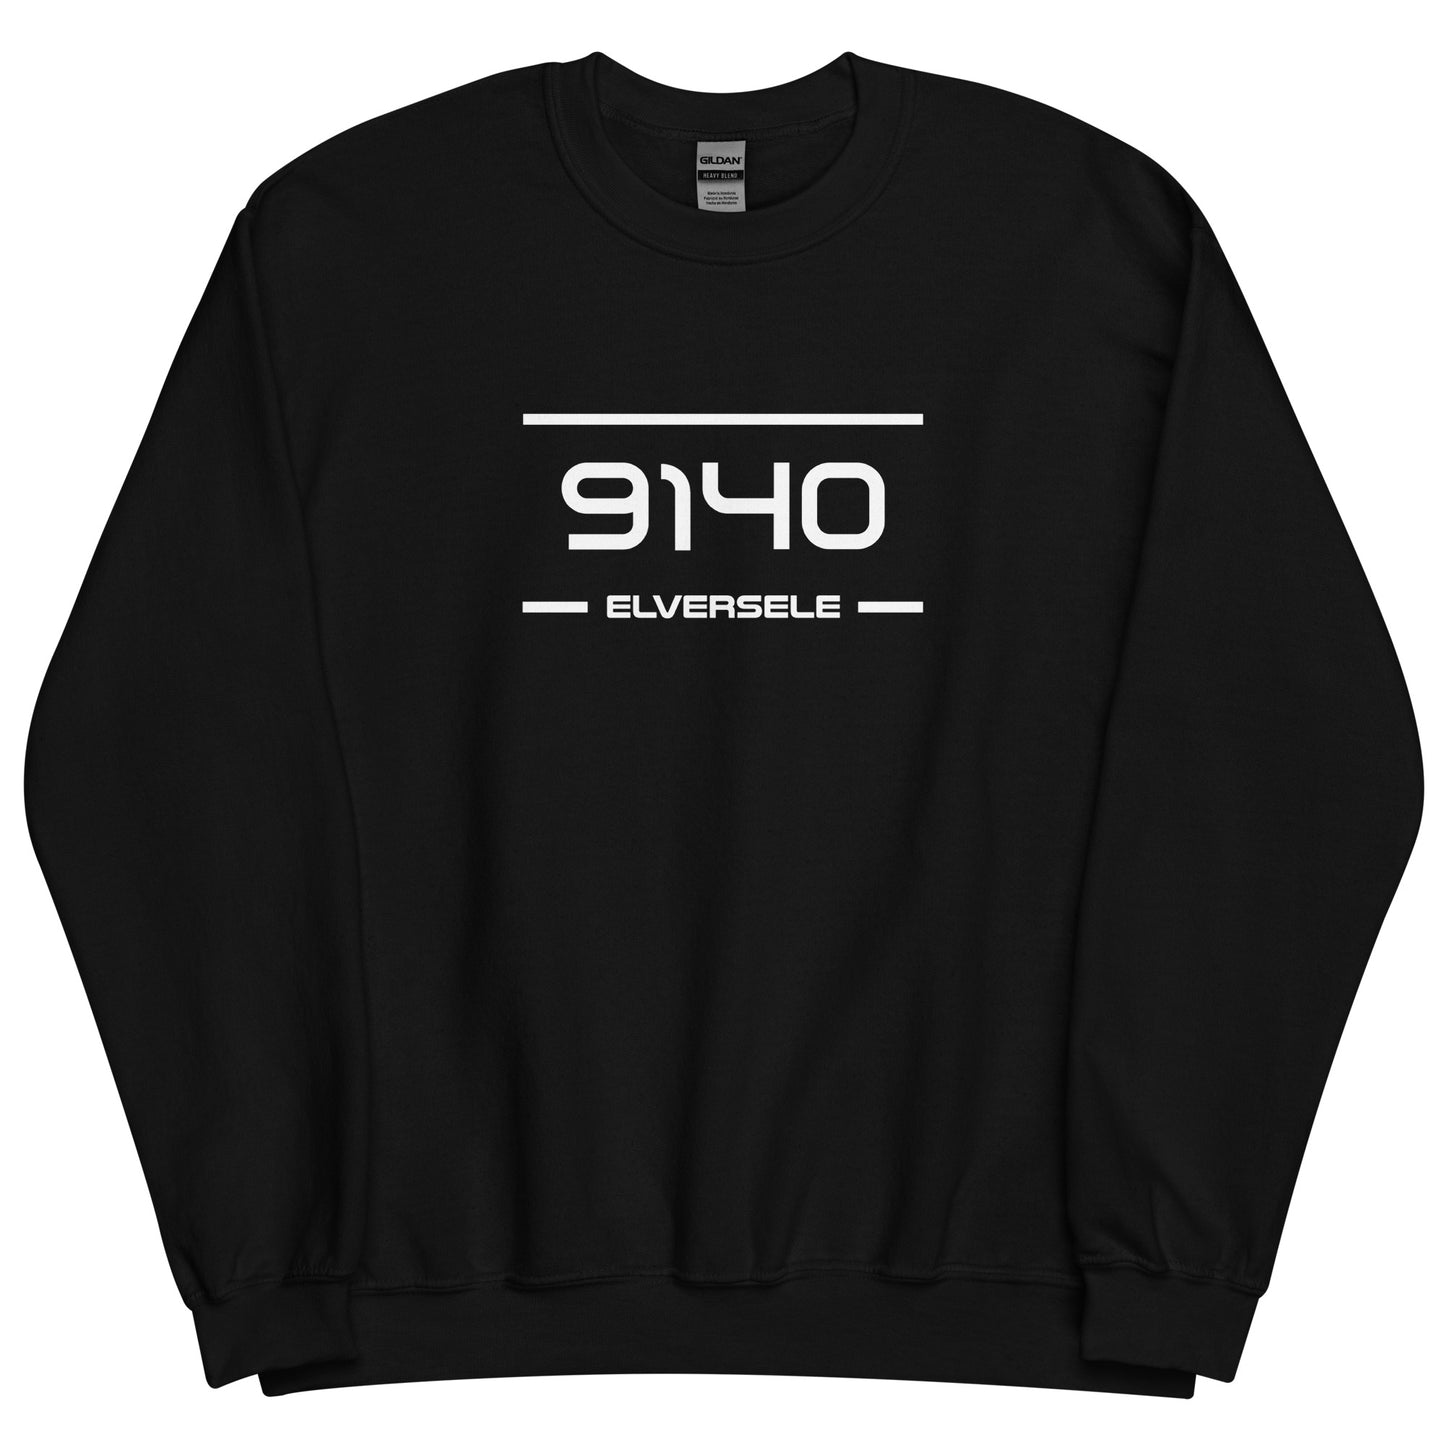 Sweater - 9140 - Elversele (M/V)